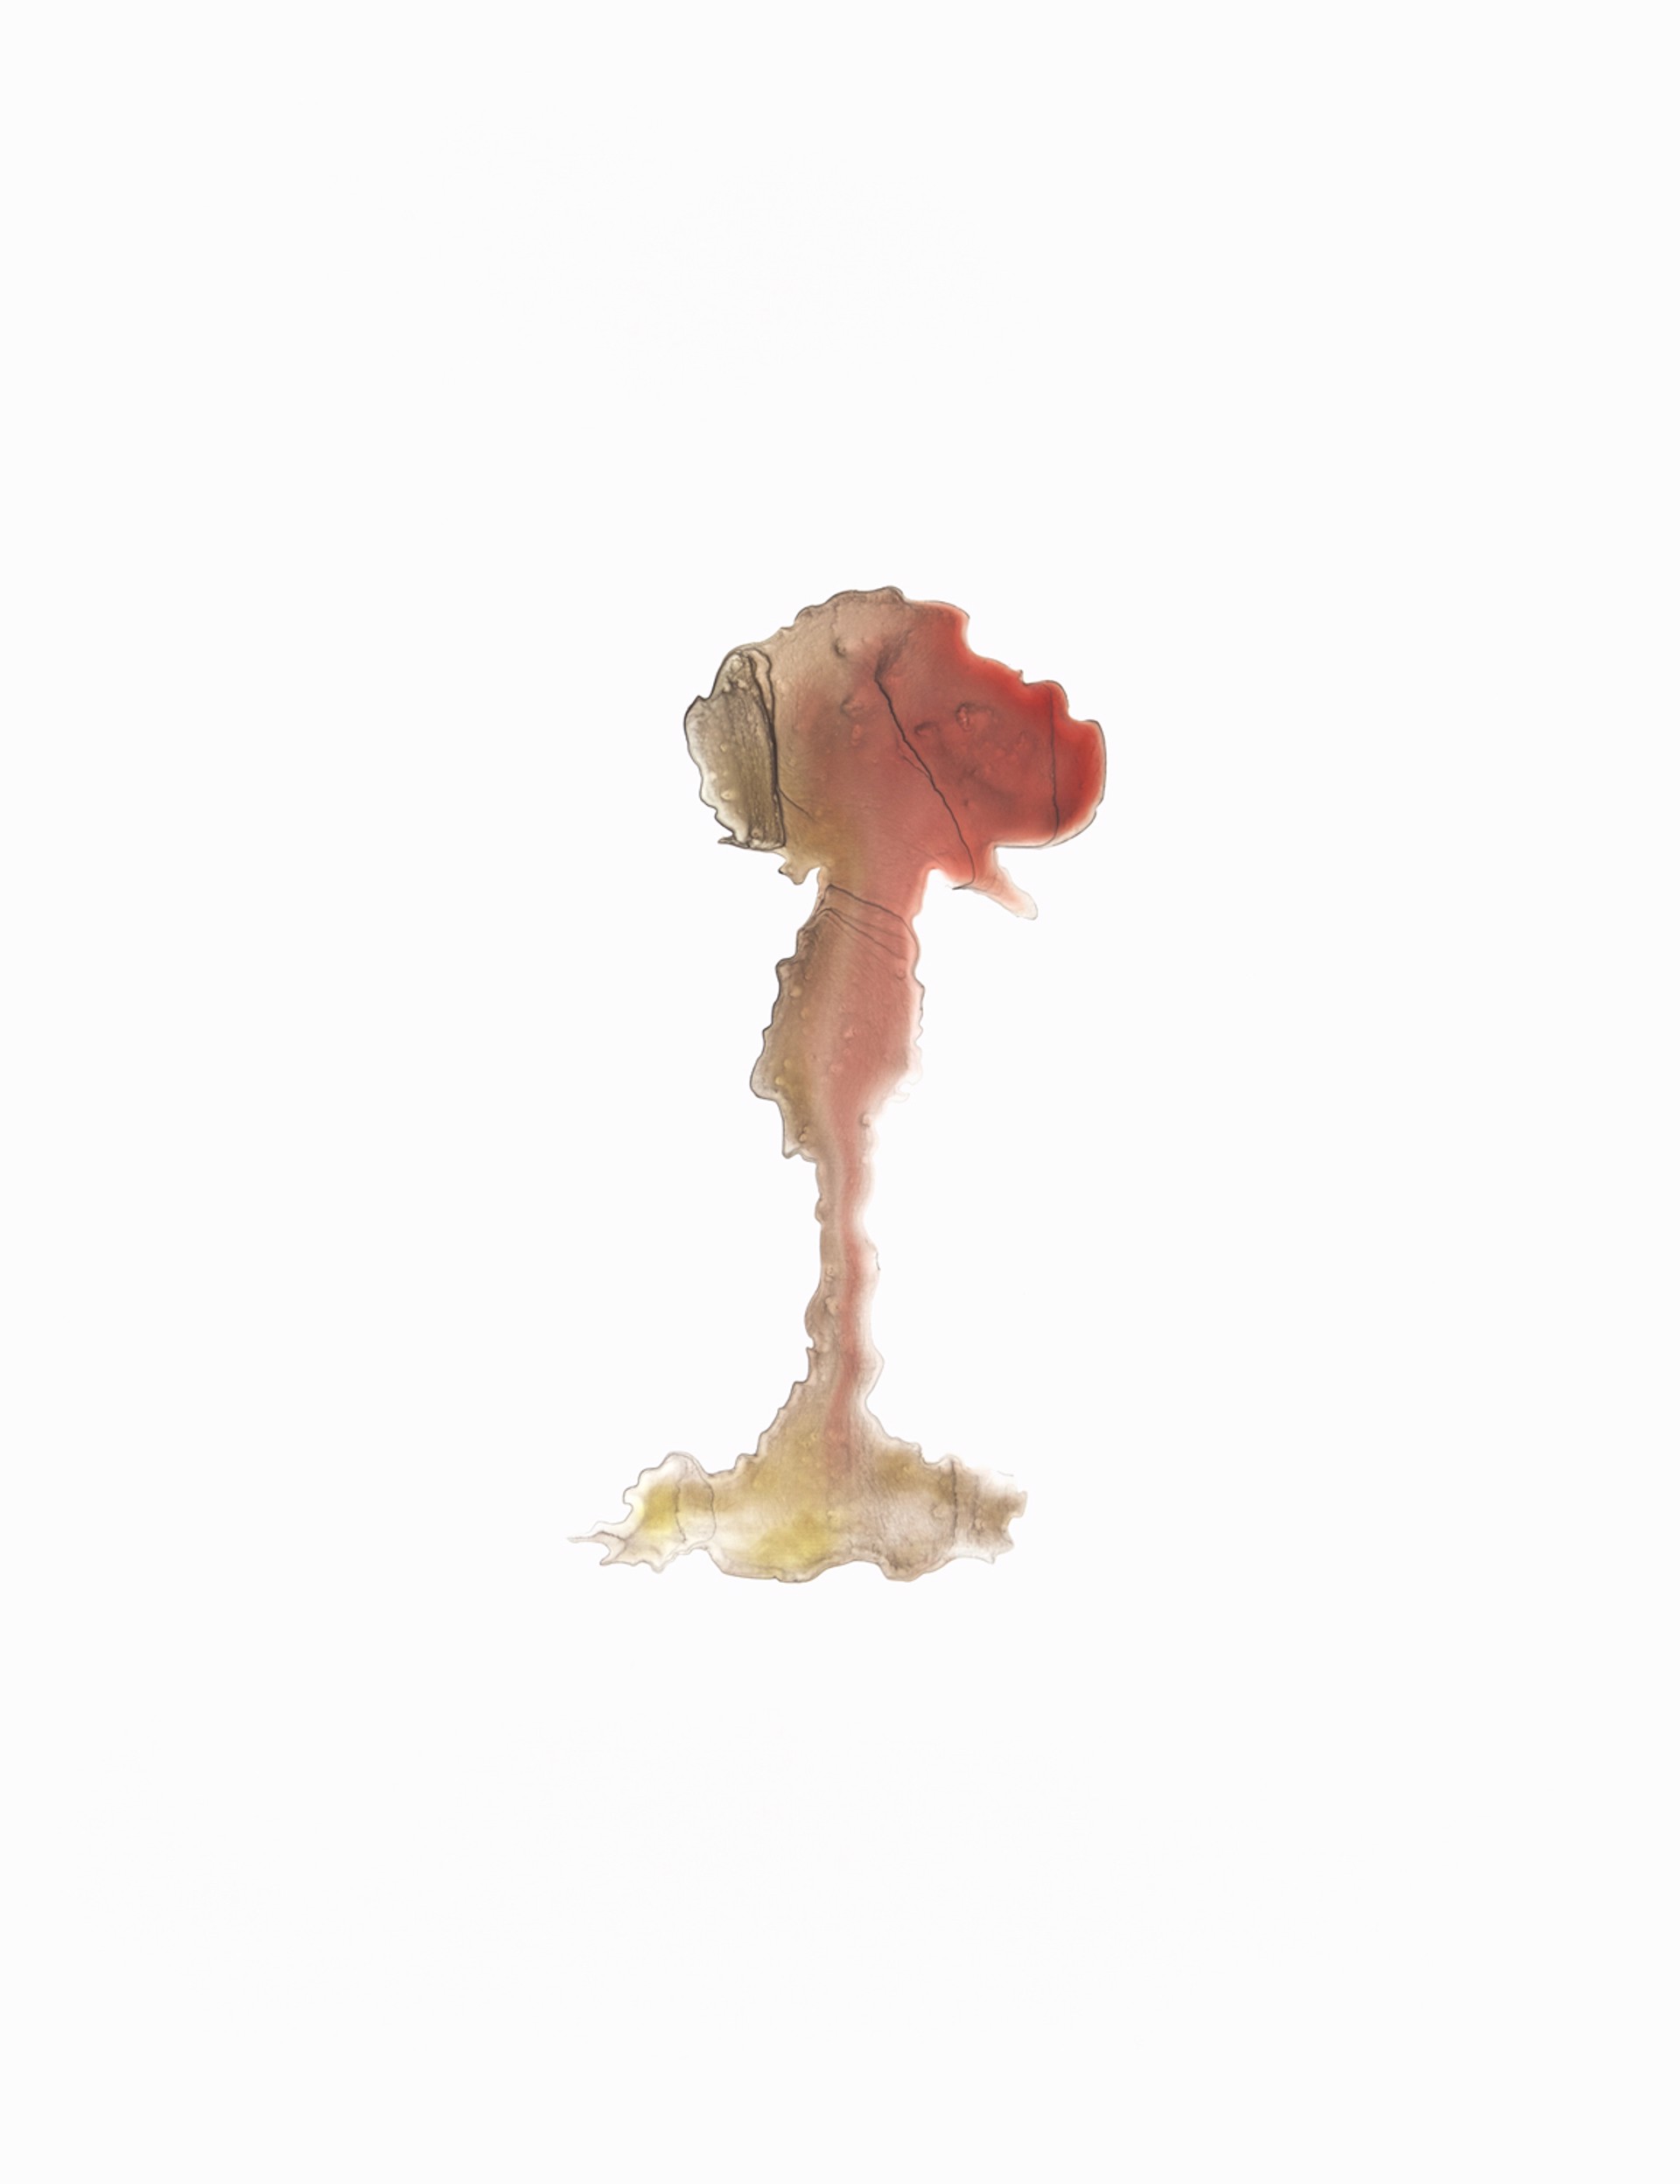 Mushroom Cloud #1.7 by Jugnet + Clairet